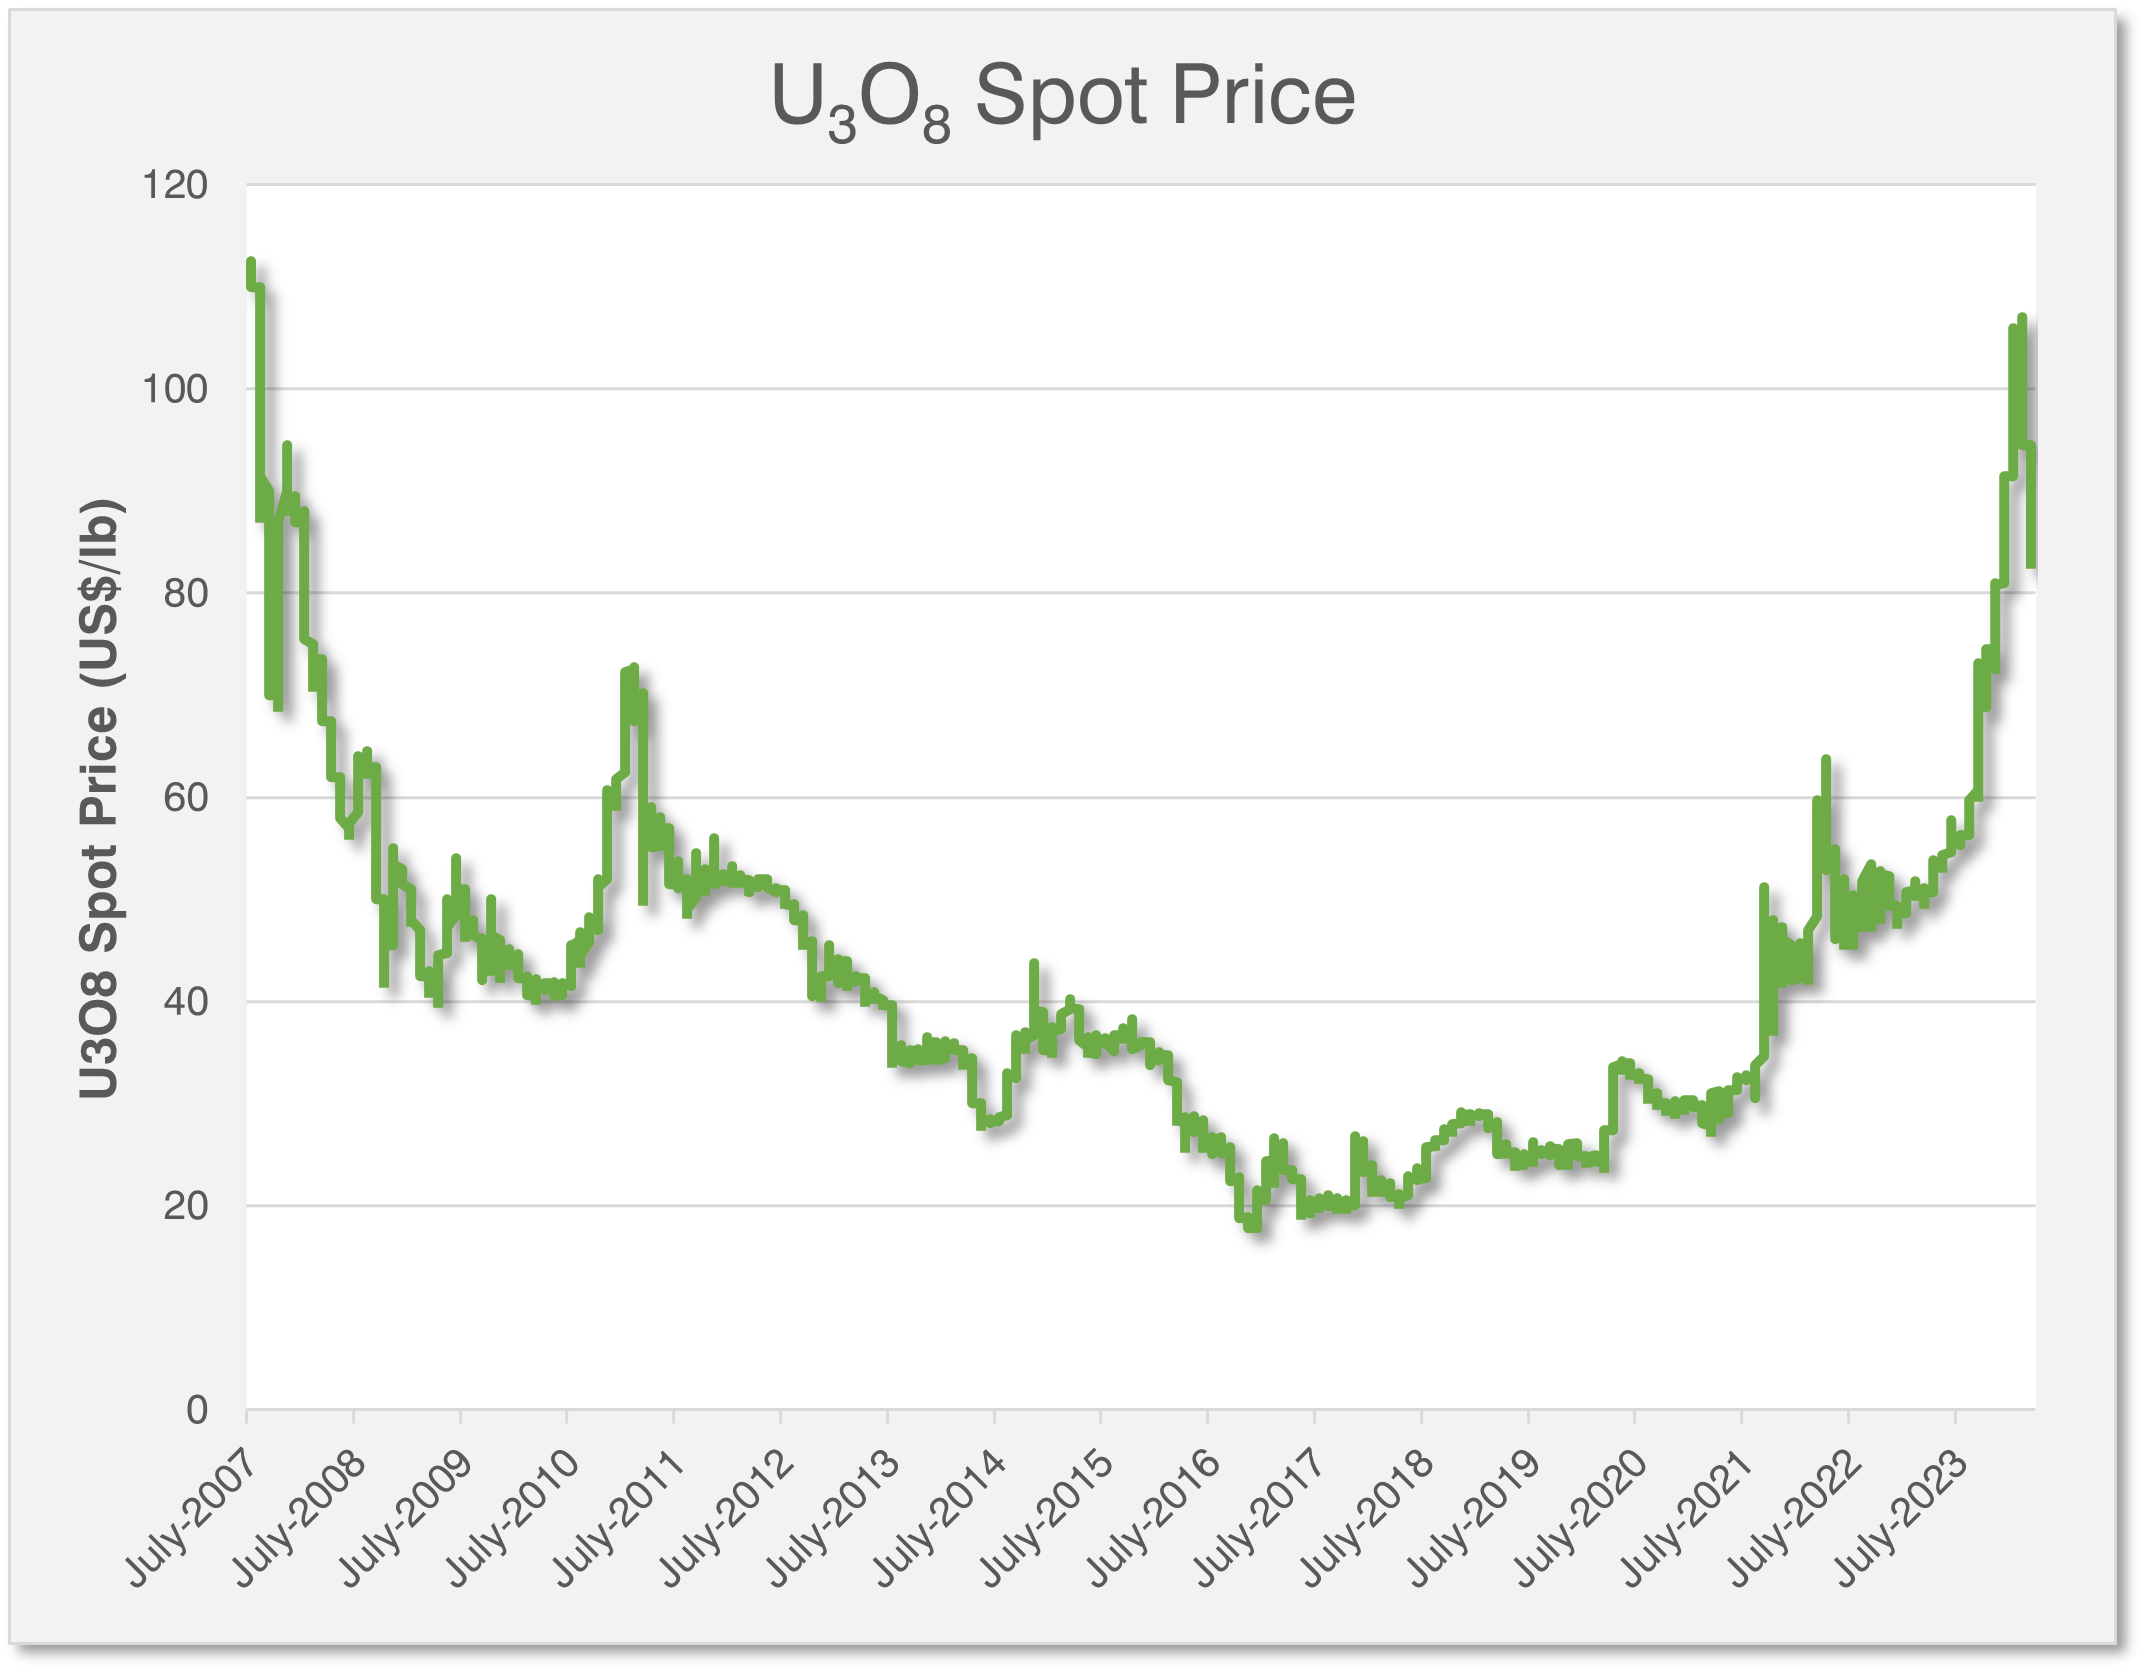 U3O8 Spot Price (reference: Numerco)